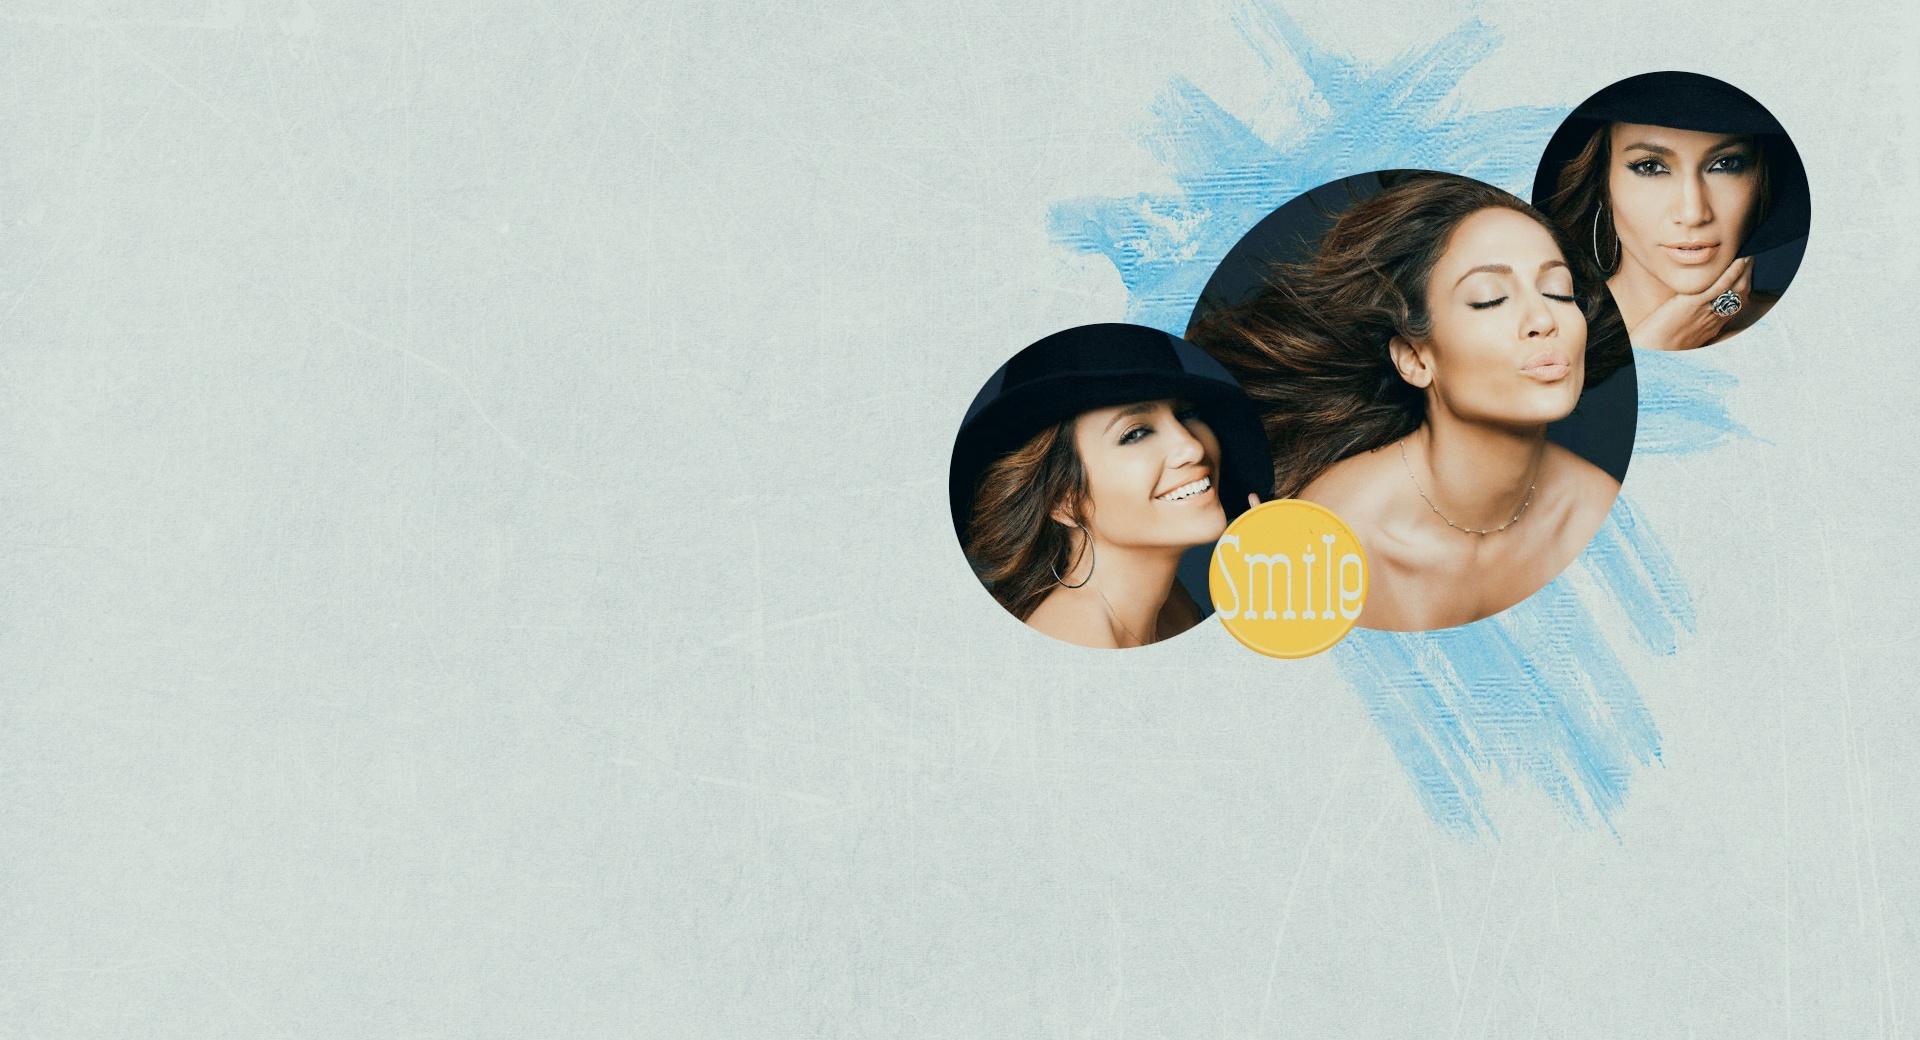 Jennifer Lopez Smile at 2048 x 2048 iPad size wallpapers HD quality